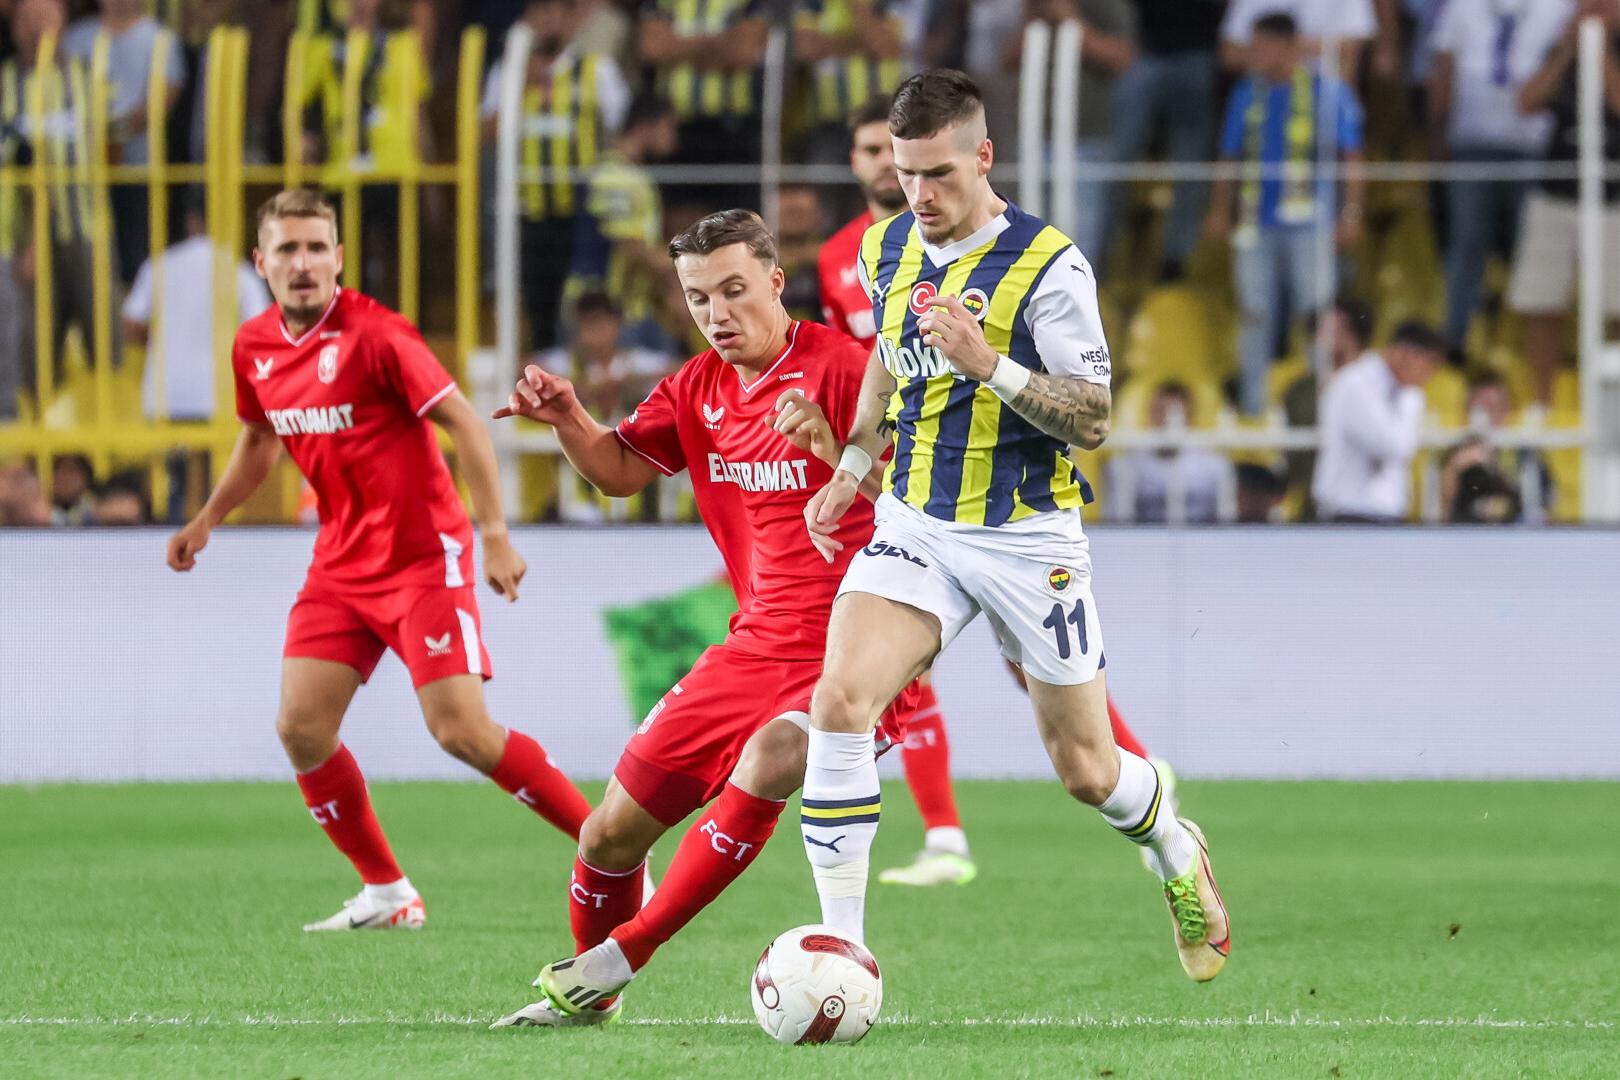 Fenerbahçe vs Sevilla: A Clash of Football Titans